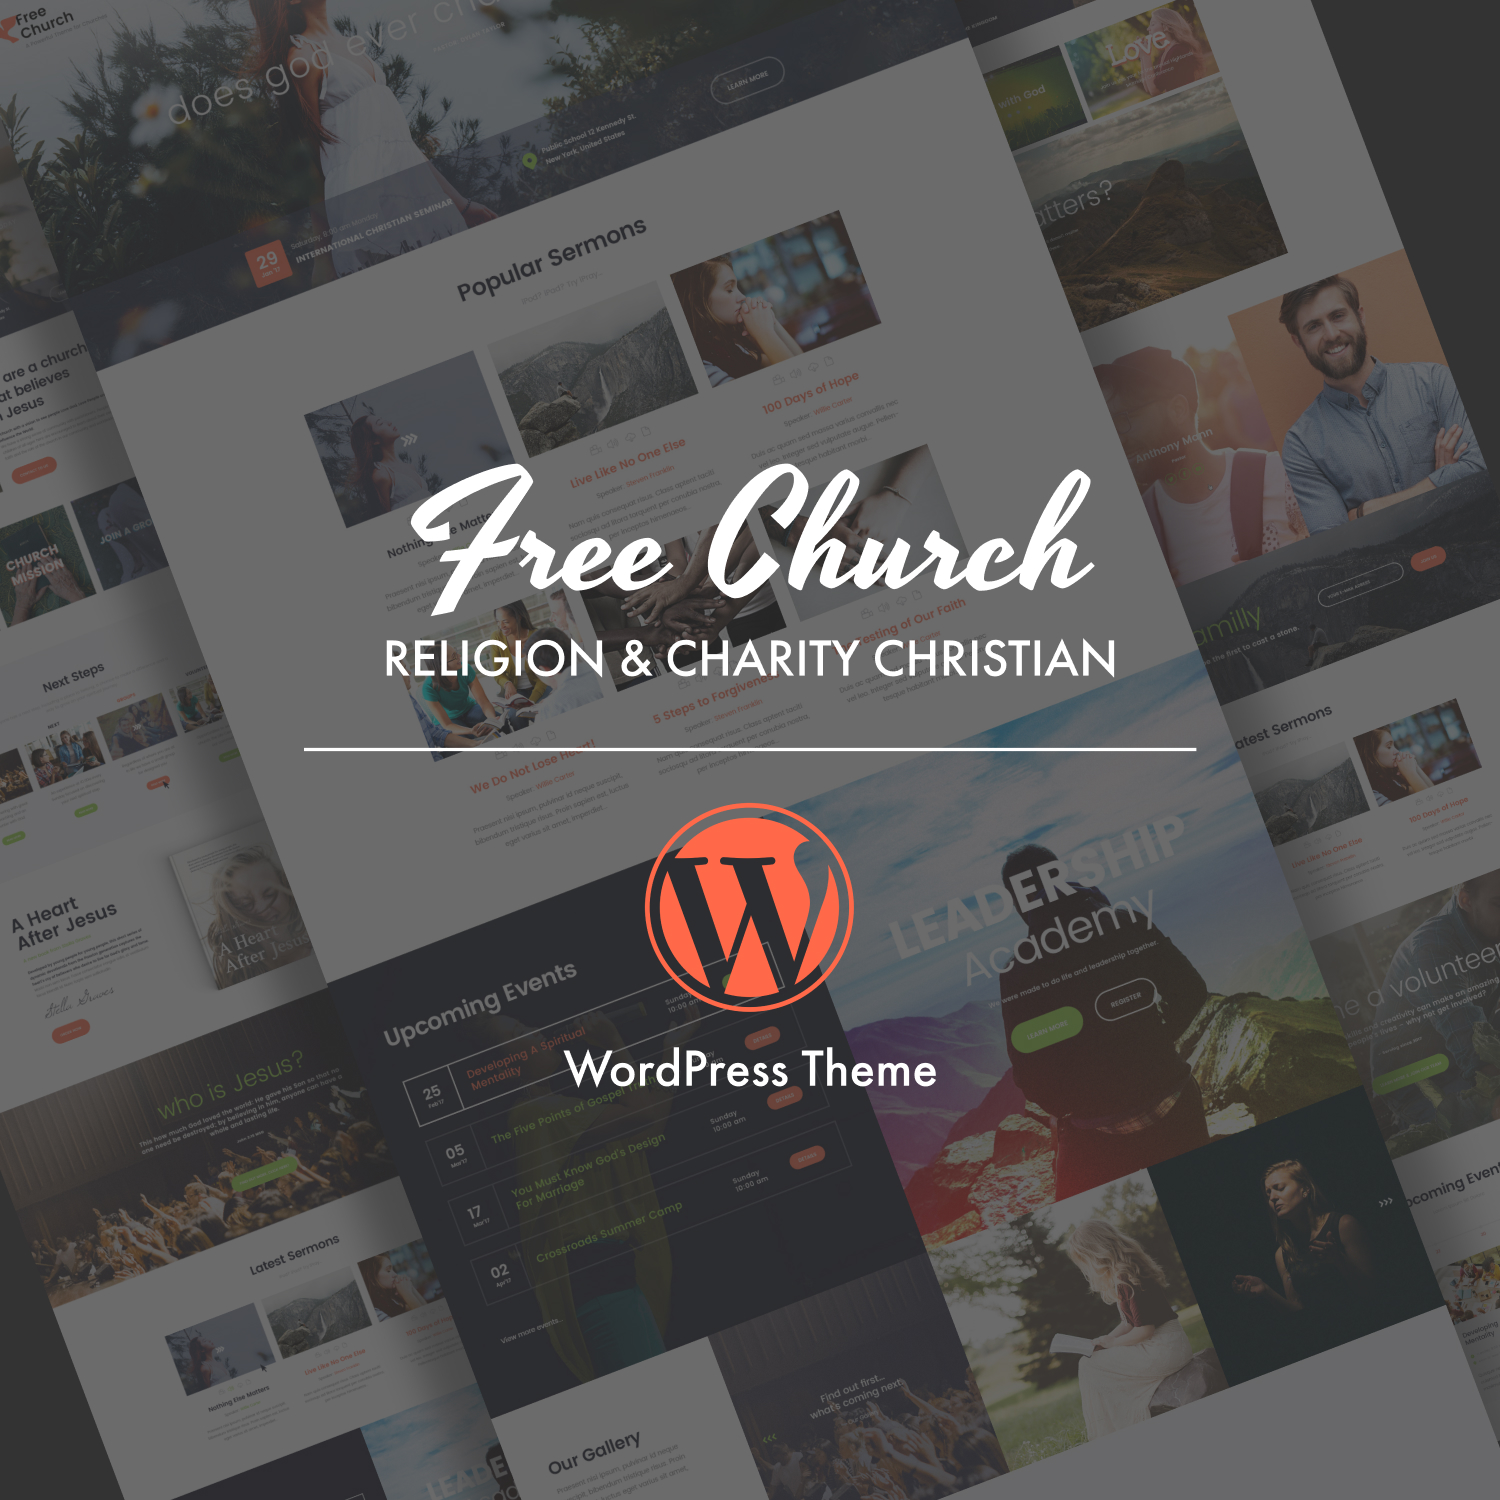 Free Church | Religion & Charity Christian WordPress Theme.